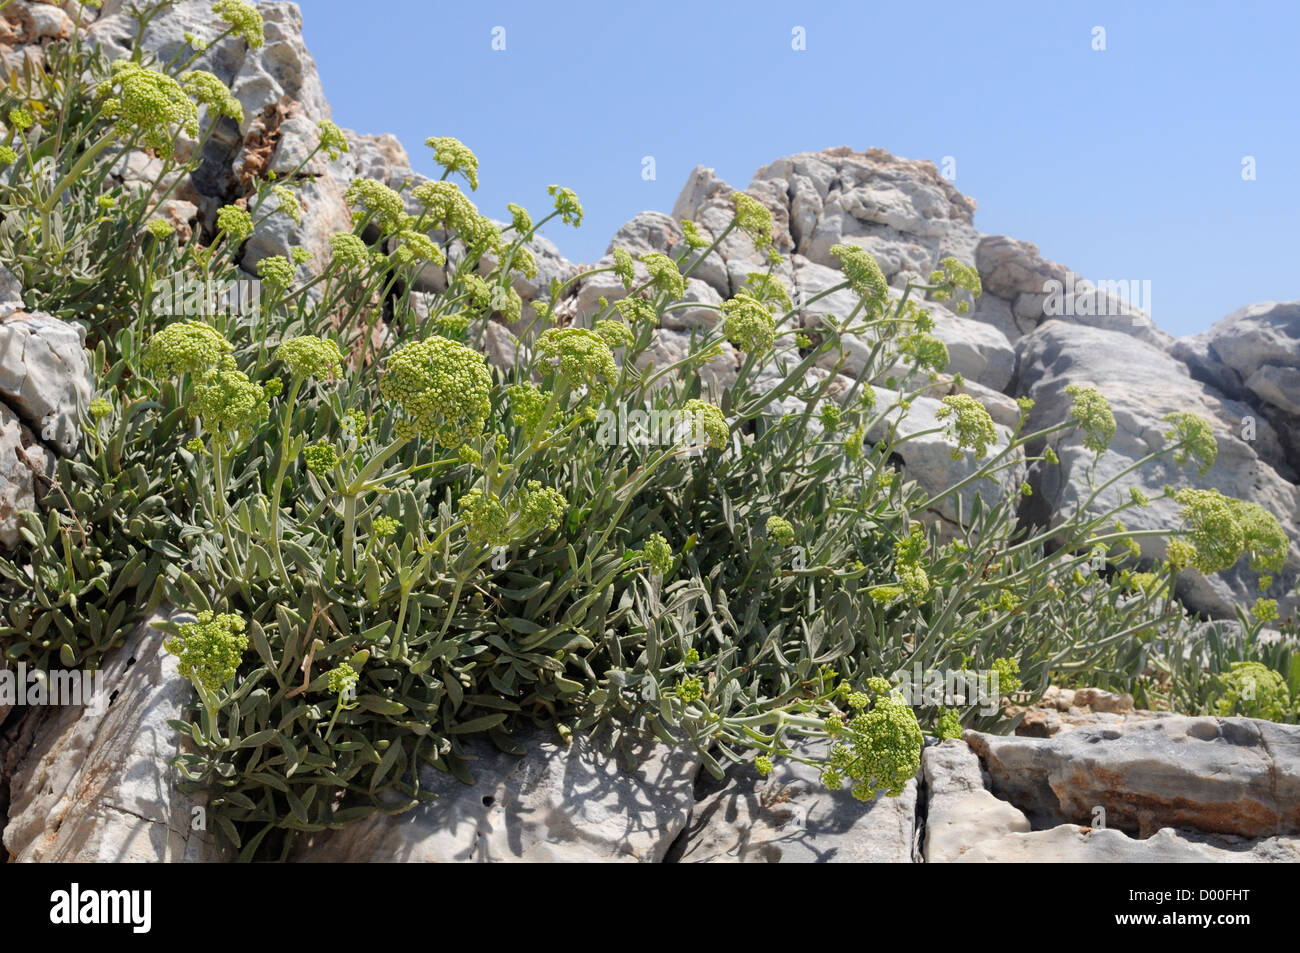 Rock samphire / Sea fennel (Crithmum maritimum) flowering on coastal limestone rocks, Psili Ammos, Samos, Greece, August. Stock Photo